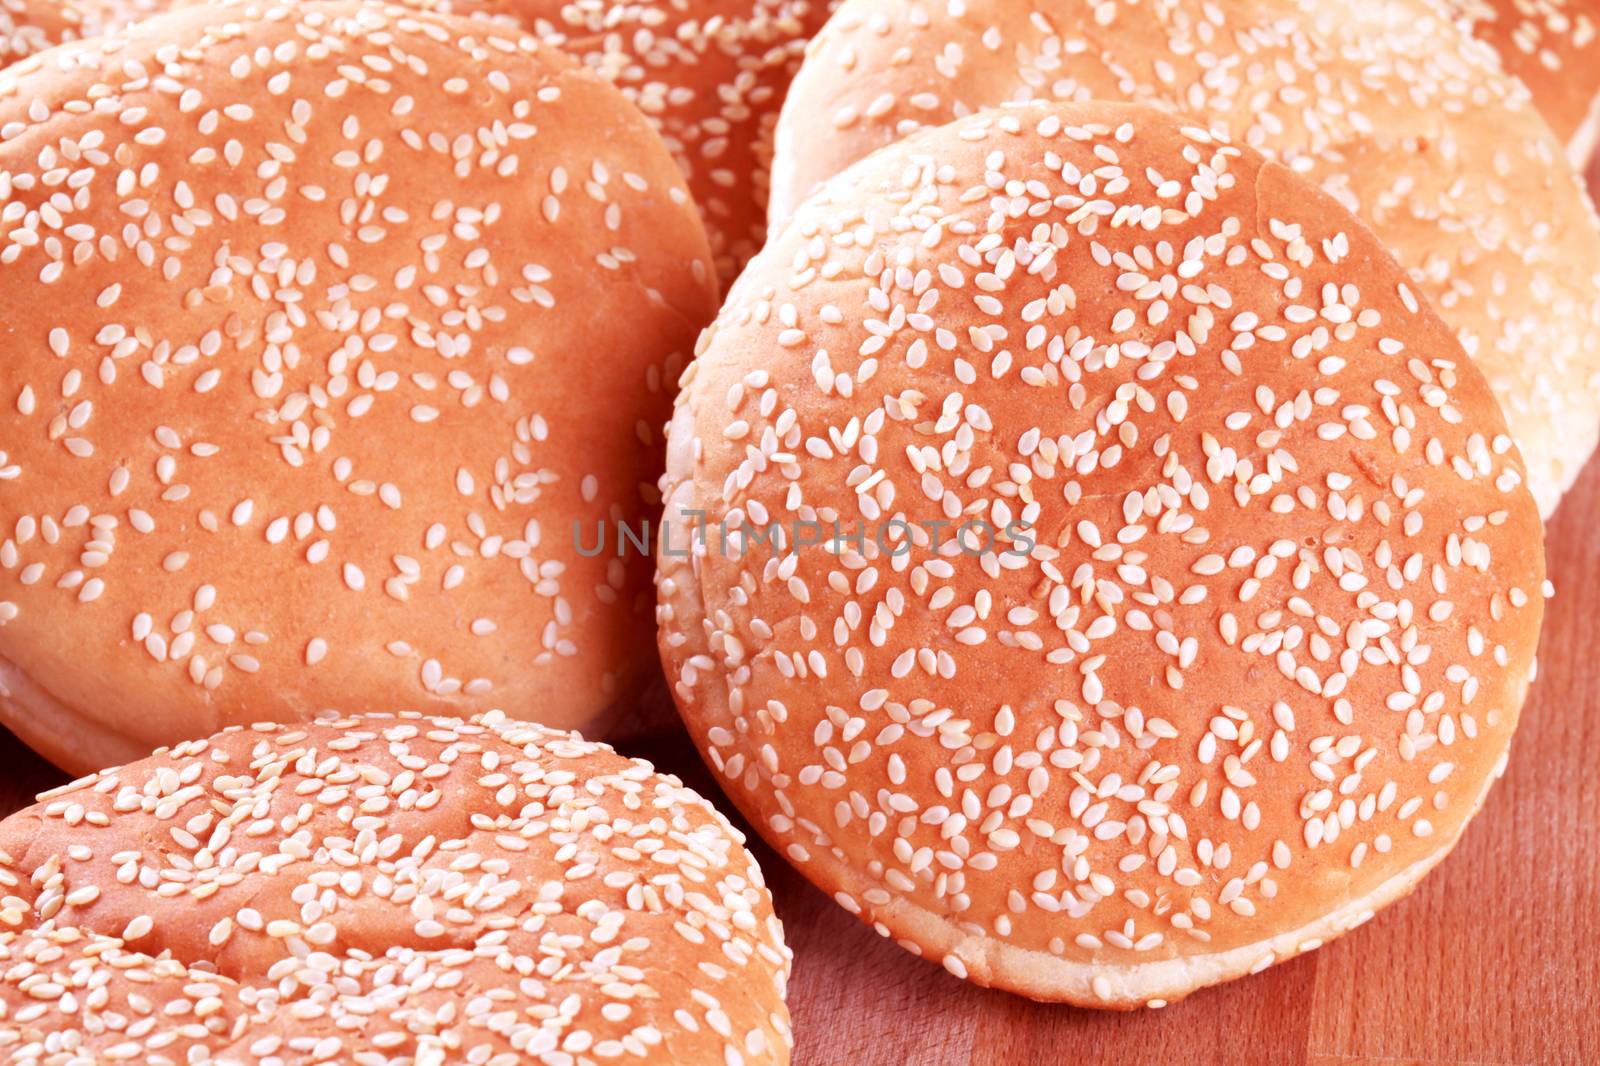 Hamburger buns�with sesame seeds on top